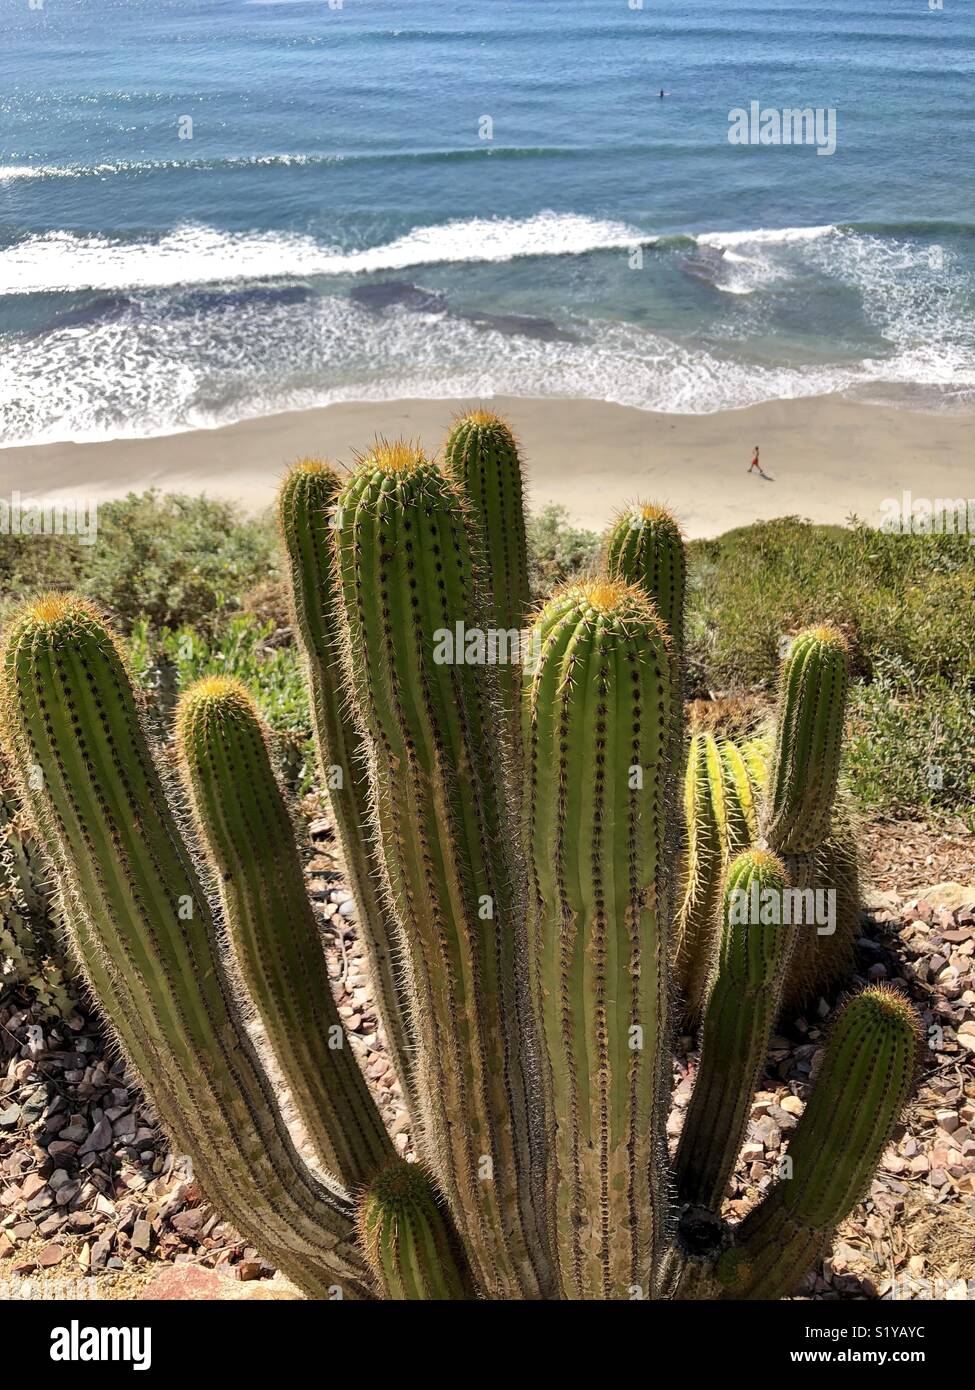 Cactus au bord de la mer Photo Stock - Alamy